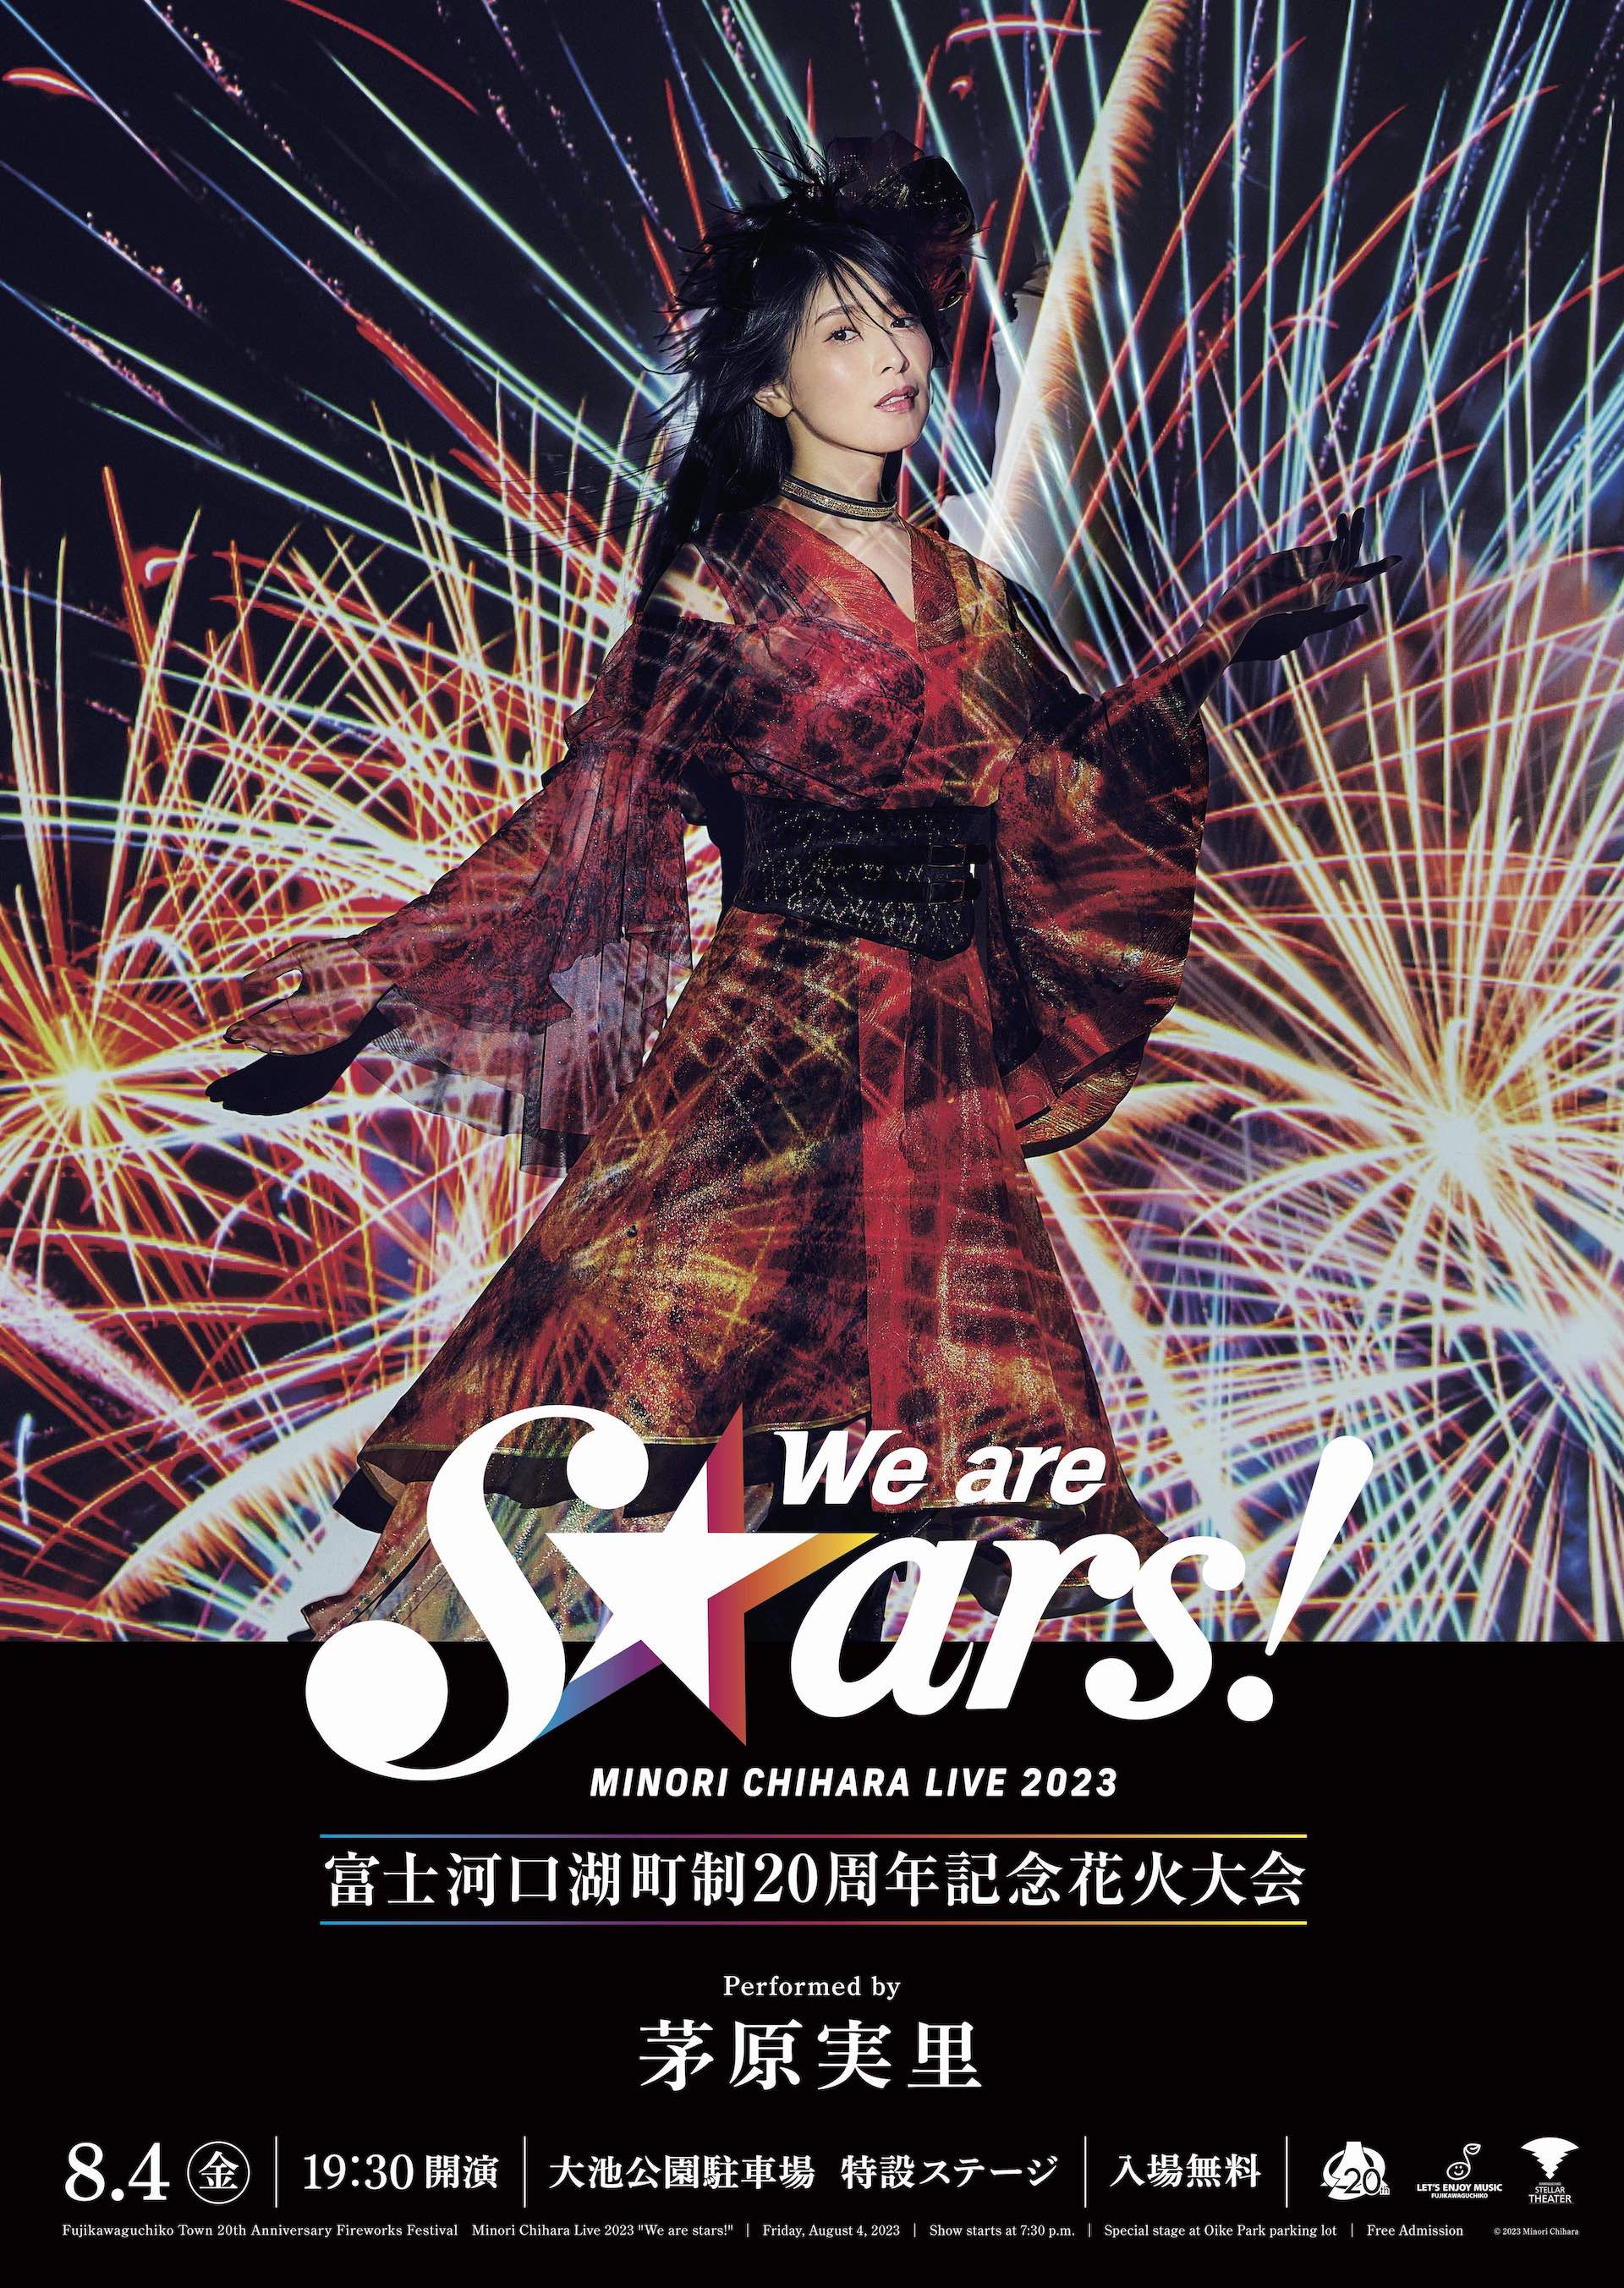 "We are stars!" かき氷店「さざなみ」とのコラボかき氷を販売